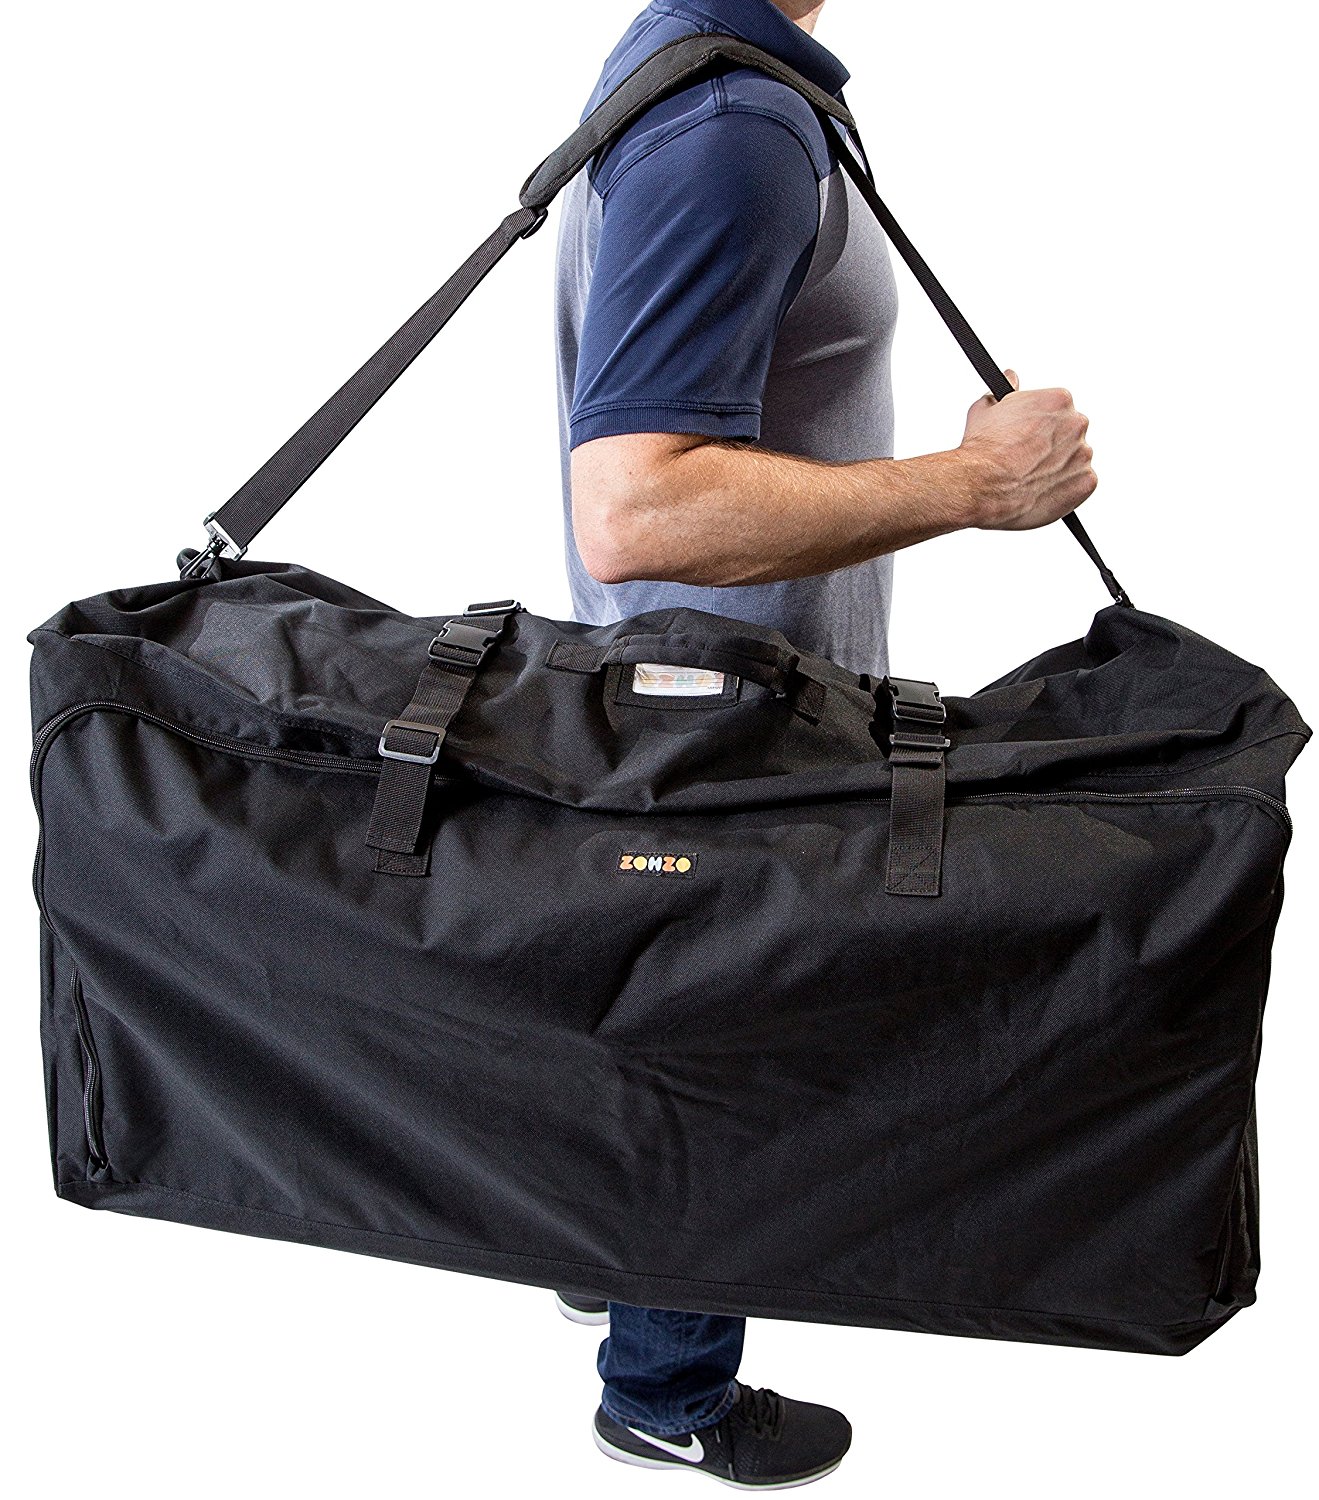 zohzo stroller travel bag